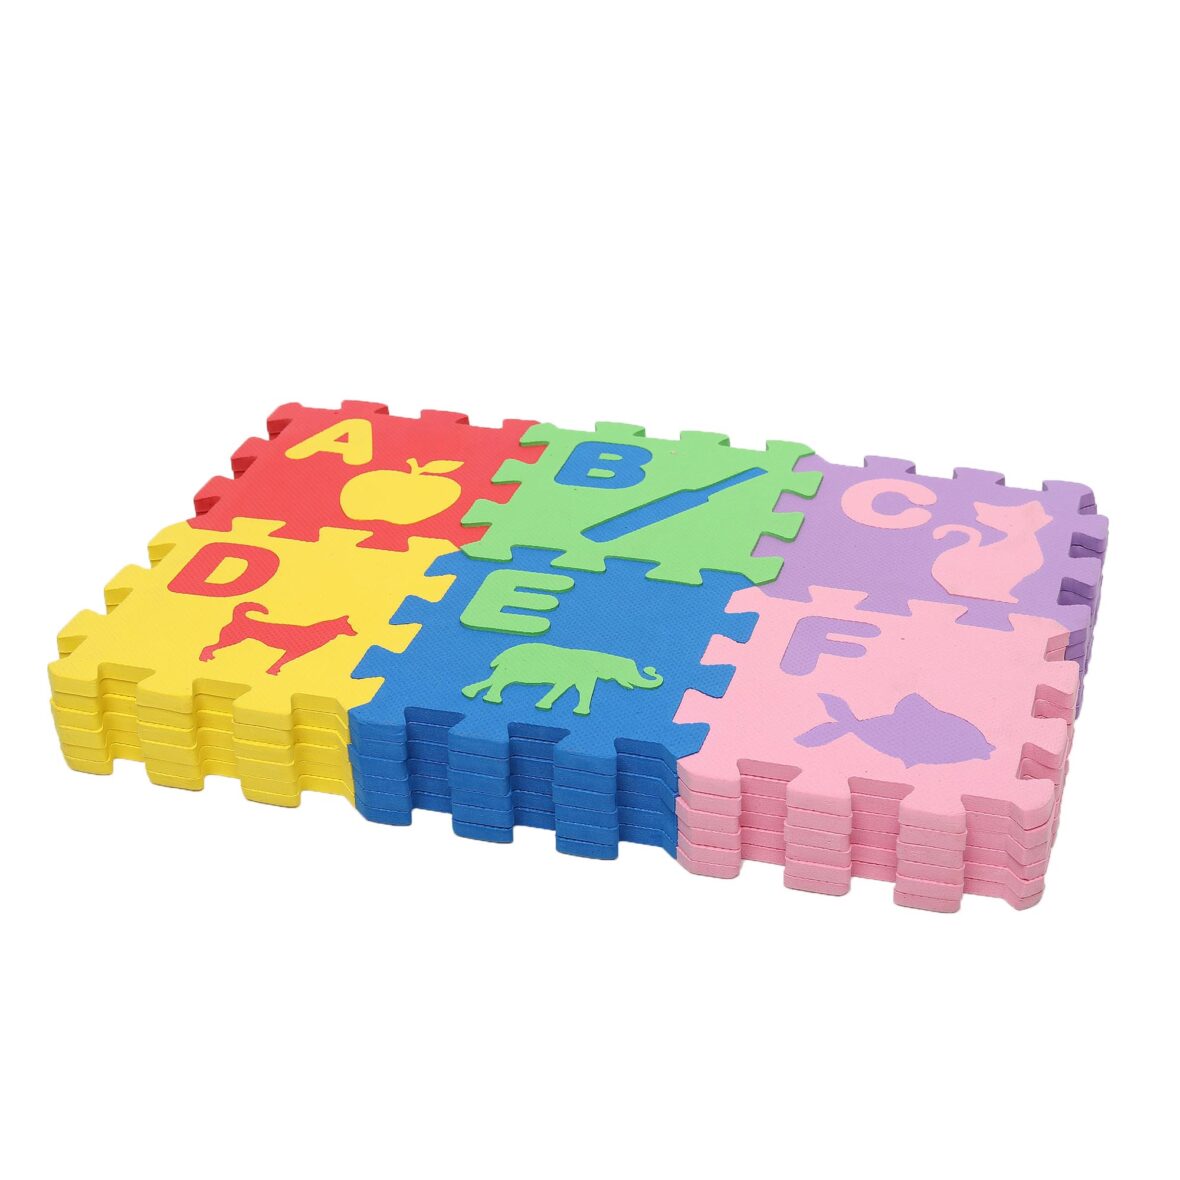 Eva foam puzzle mat big